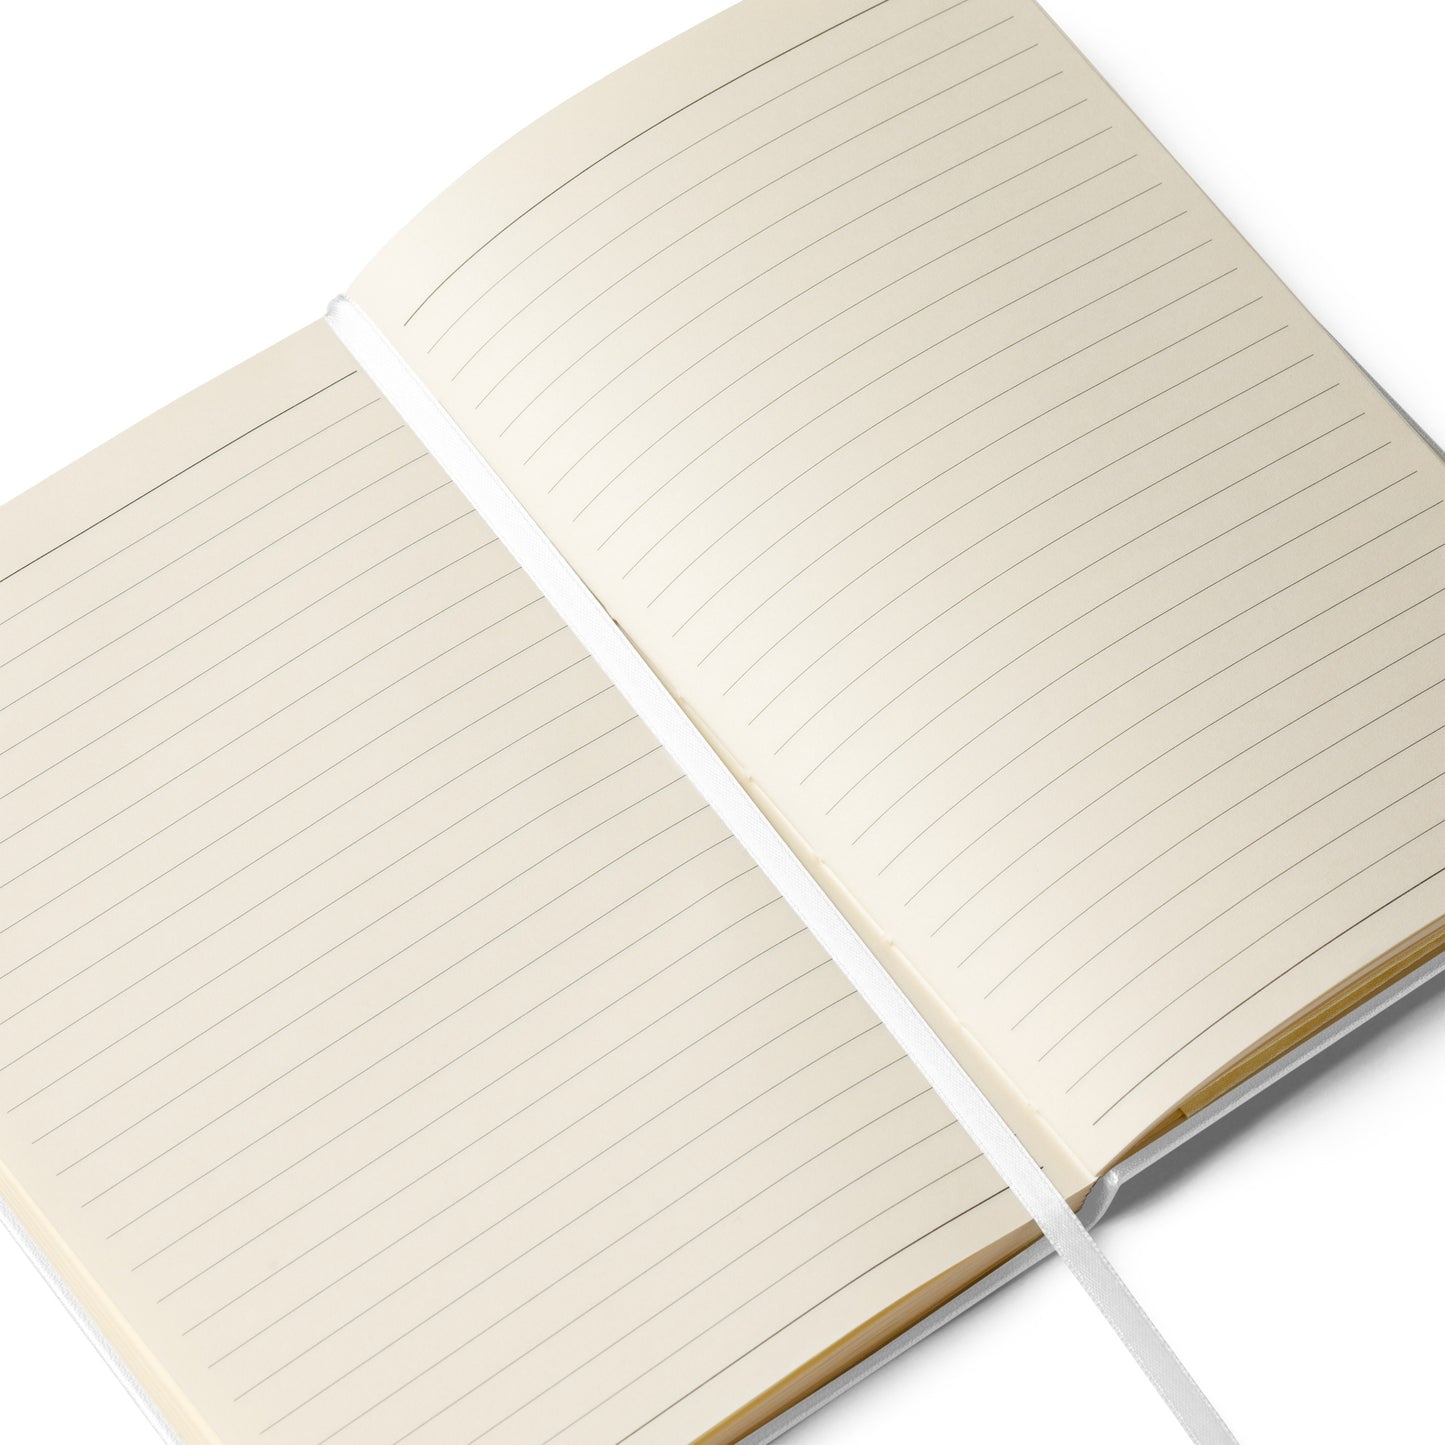 Notebook - Hardcover bound